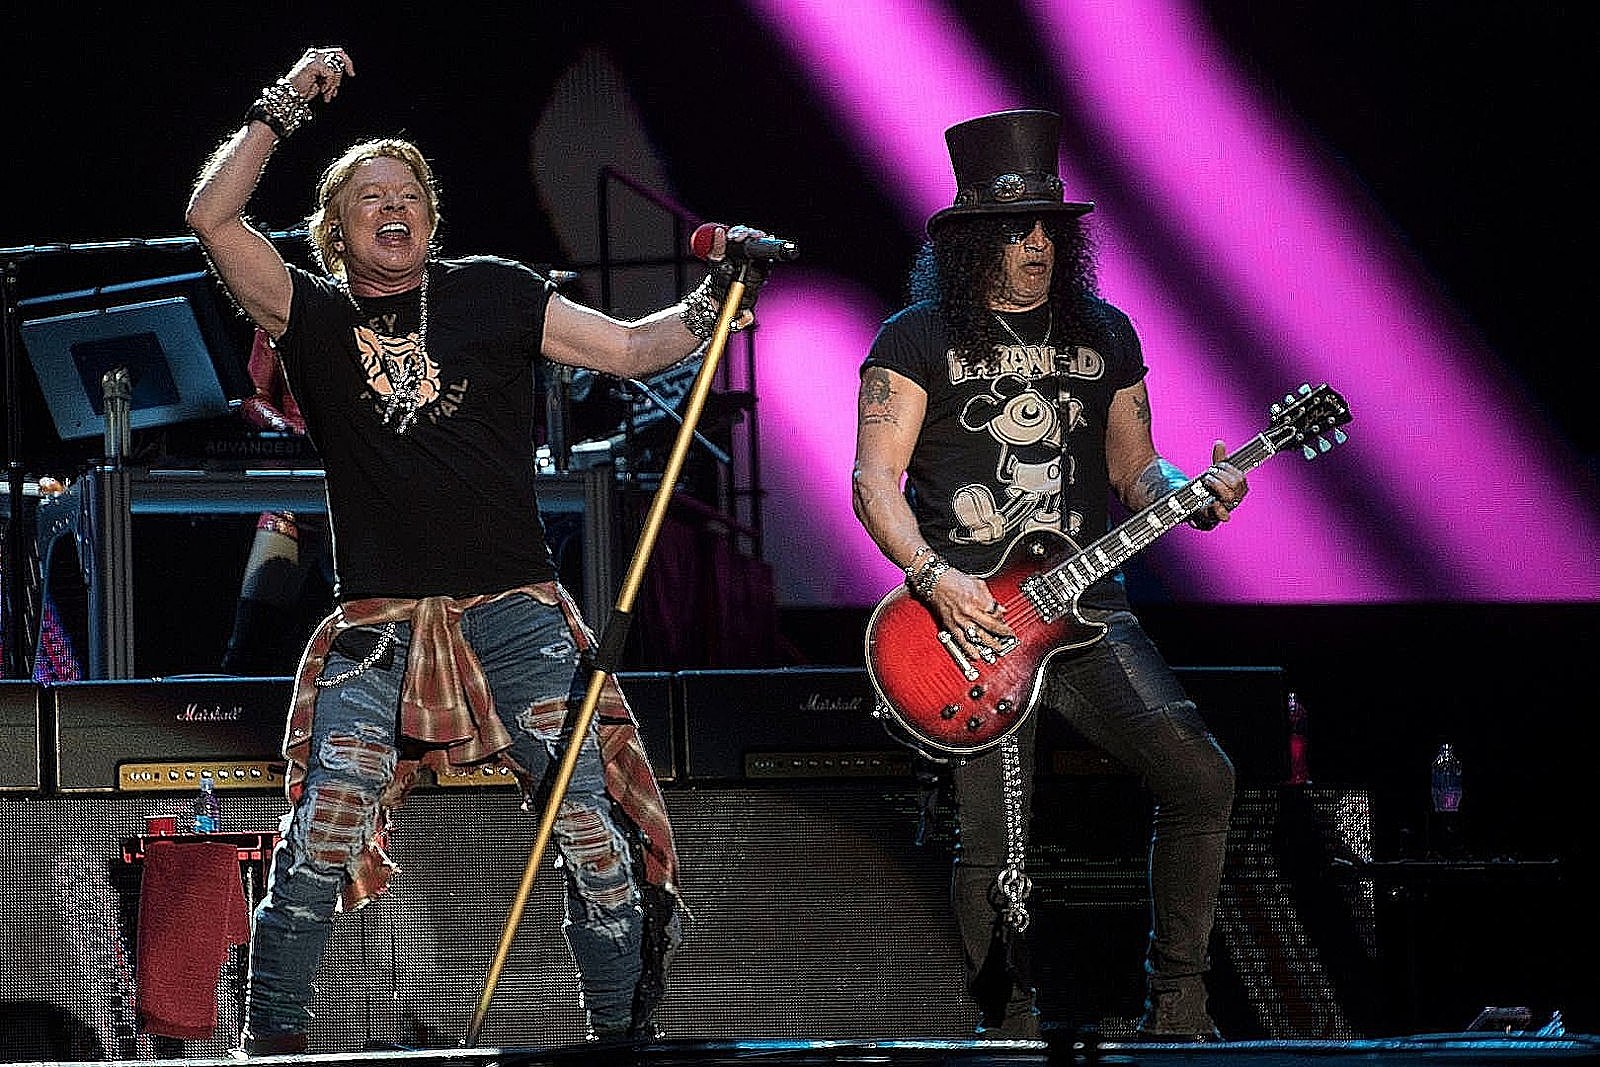 Guns N' Roses File Suit Against Store for Trademark Infringement